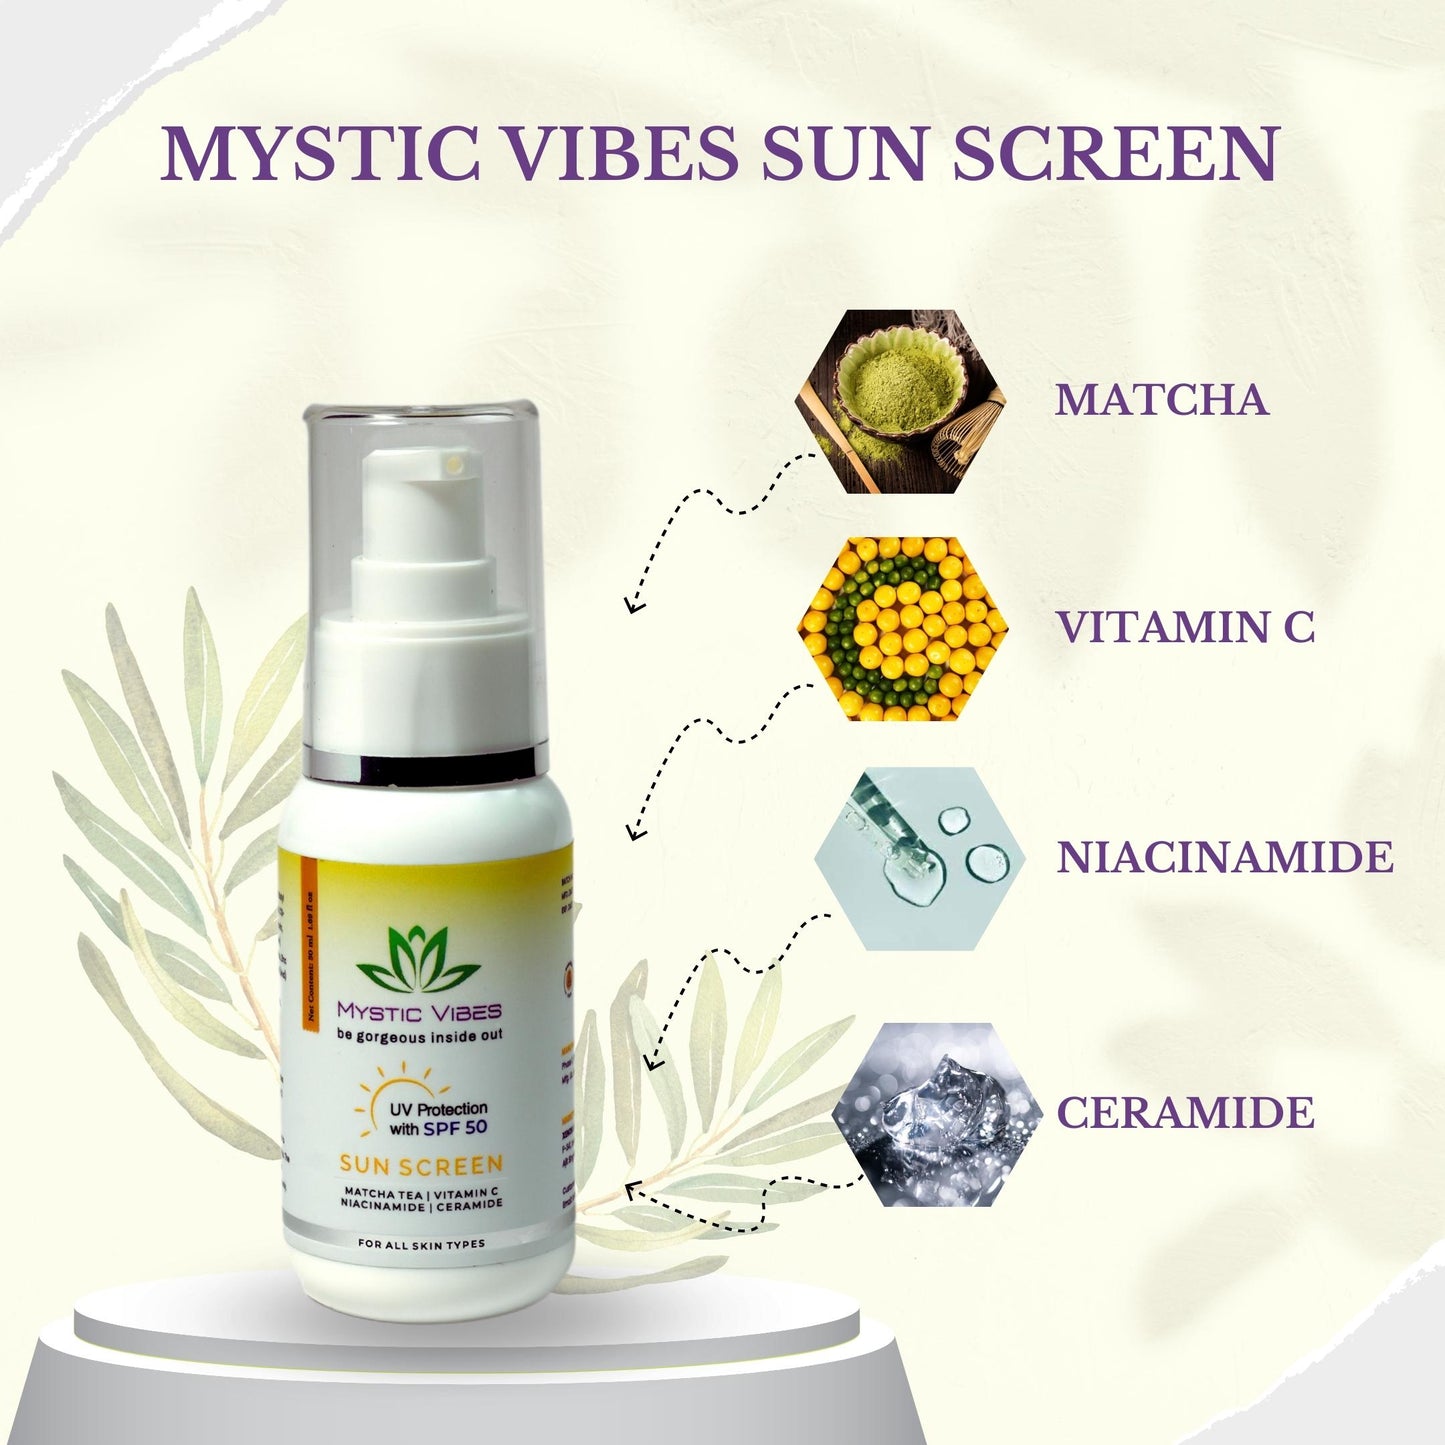 Mystic Vibes Sun Screen